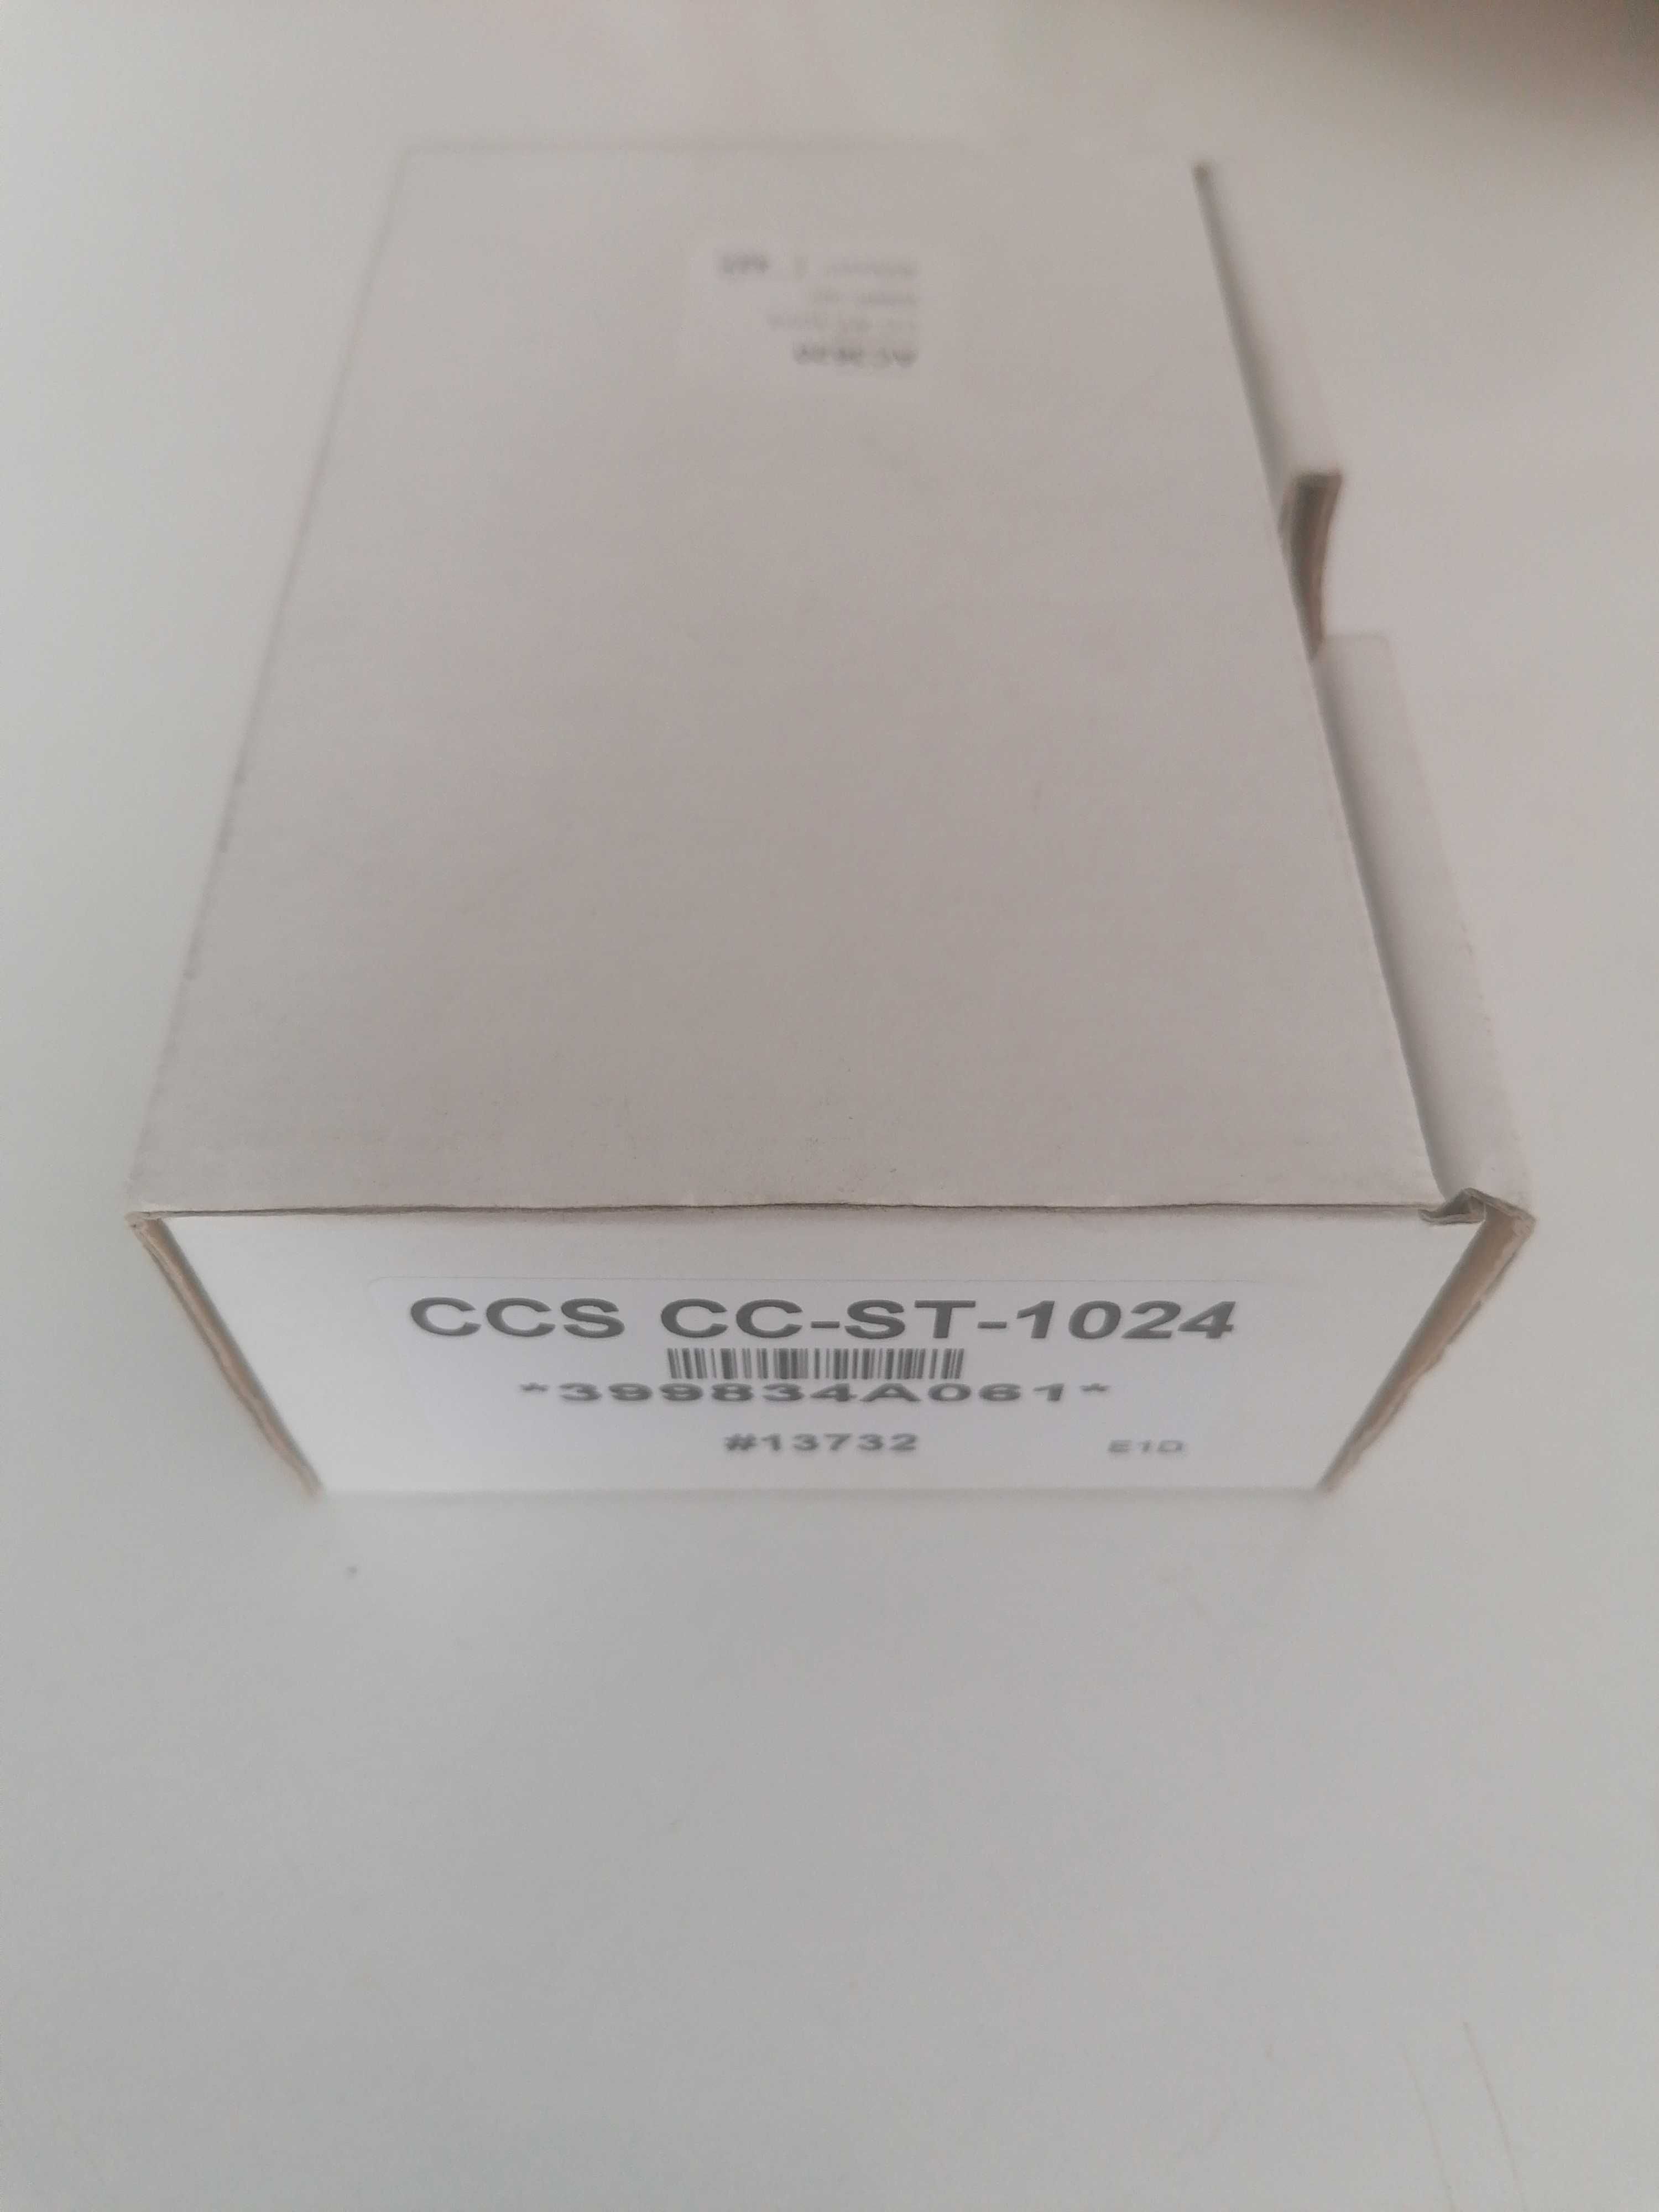 Controlador de luz CCS CC ST 1024 novo.